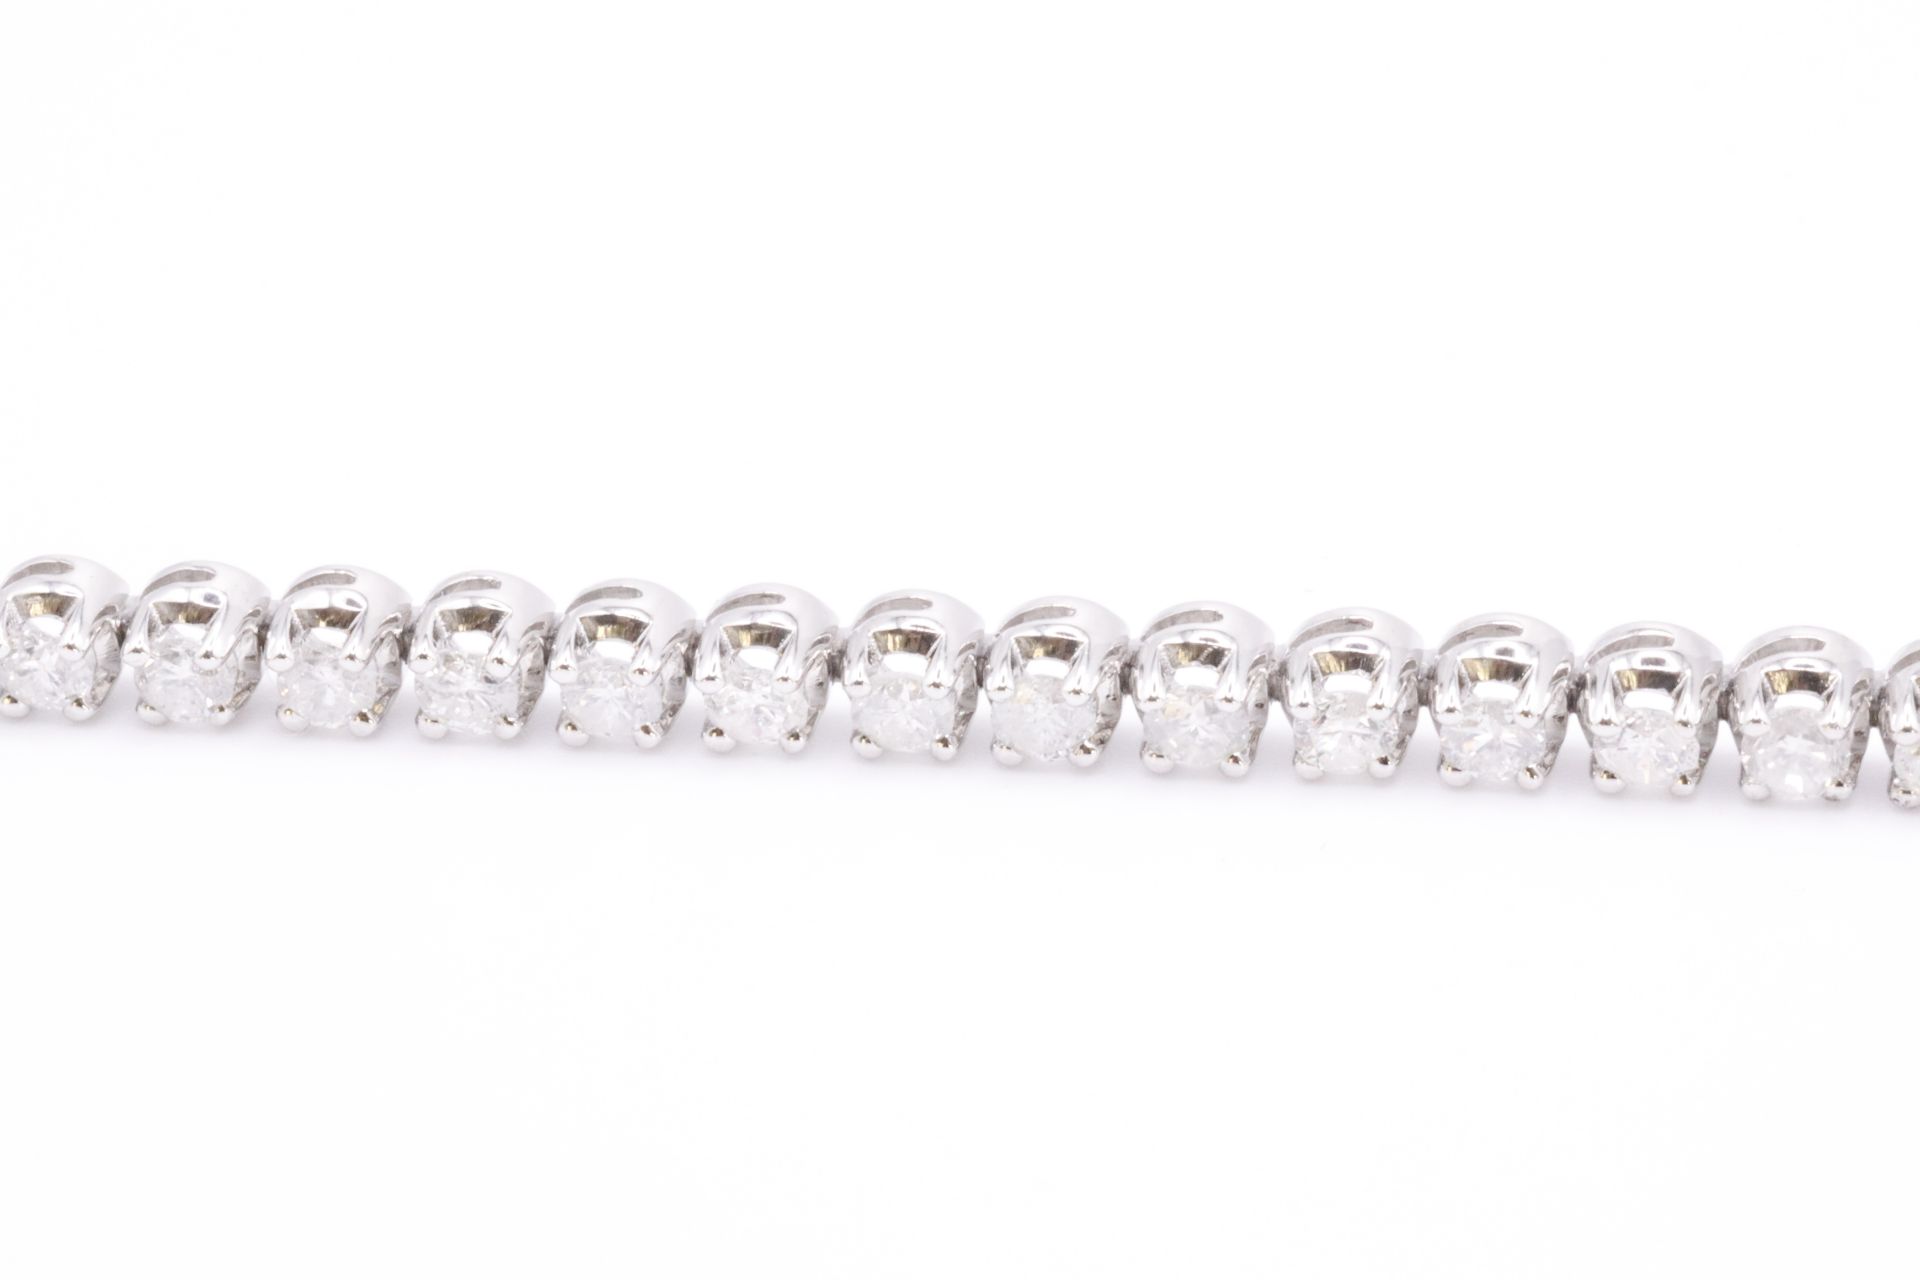 ** ON SALE **7.0 Carat 18ct White Gold Tennis Bracelet set with Round Brilliant Cut Natural Diamonds - Image 29 of 33